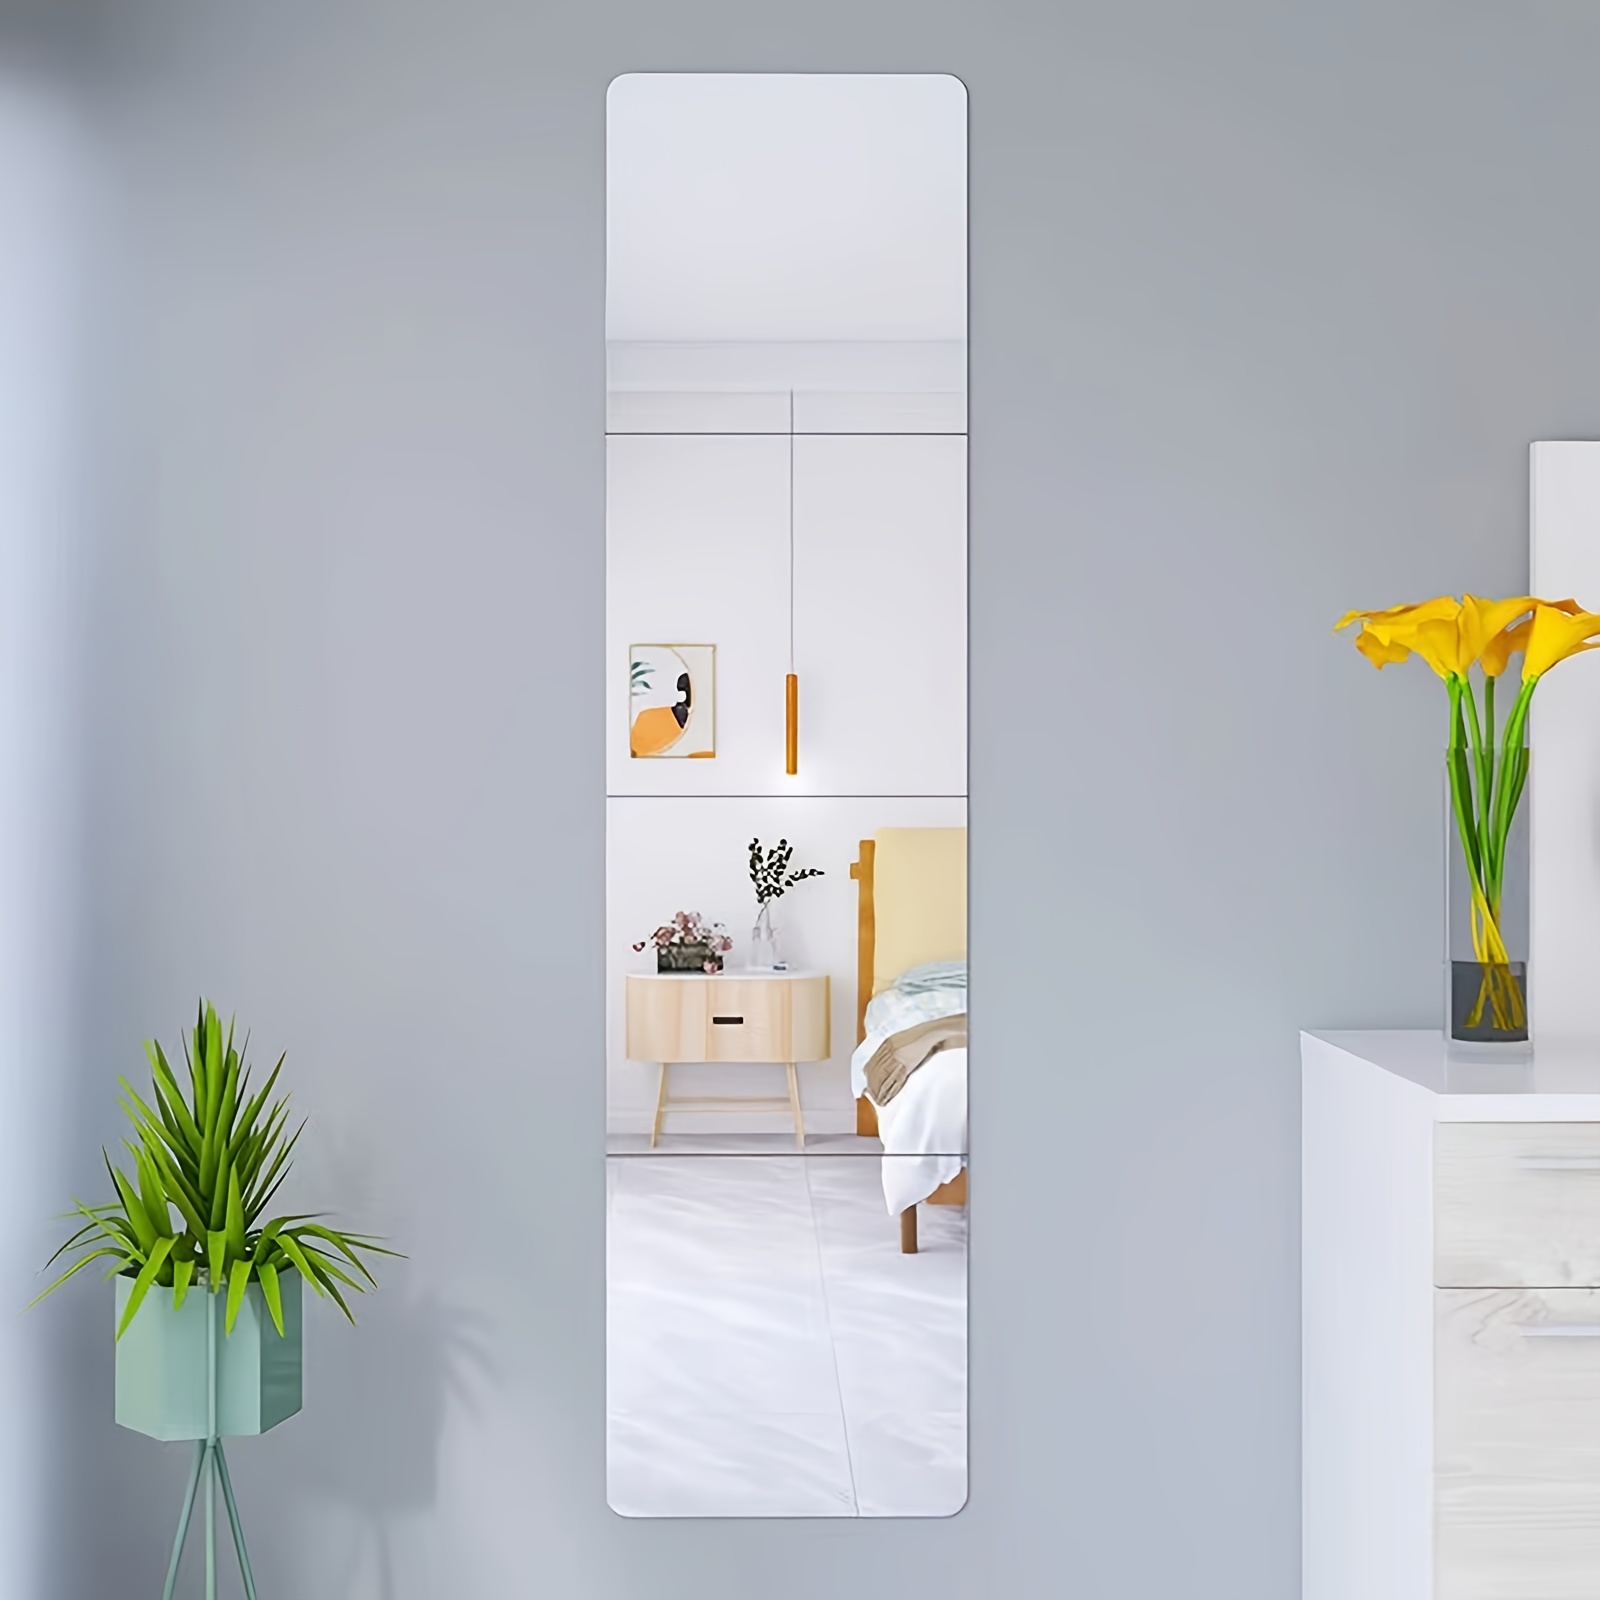 Decorative Square Wall Mirror Self-adhesive Mirror Home Decoration